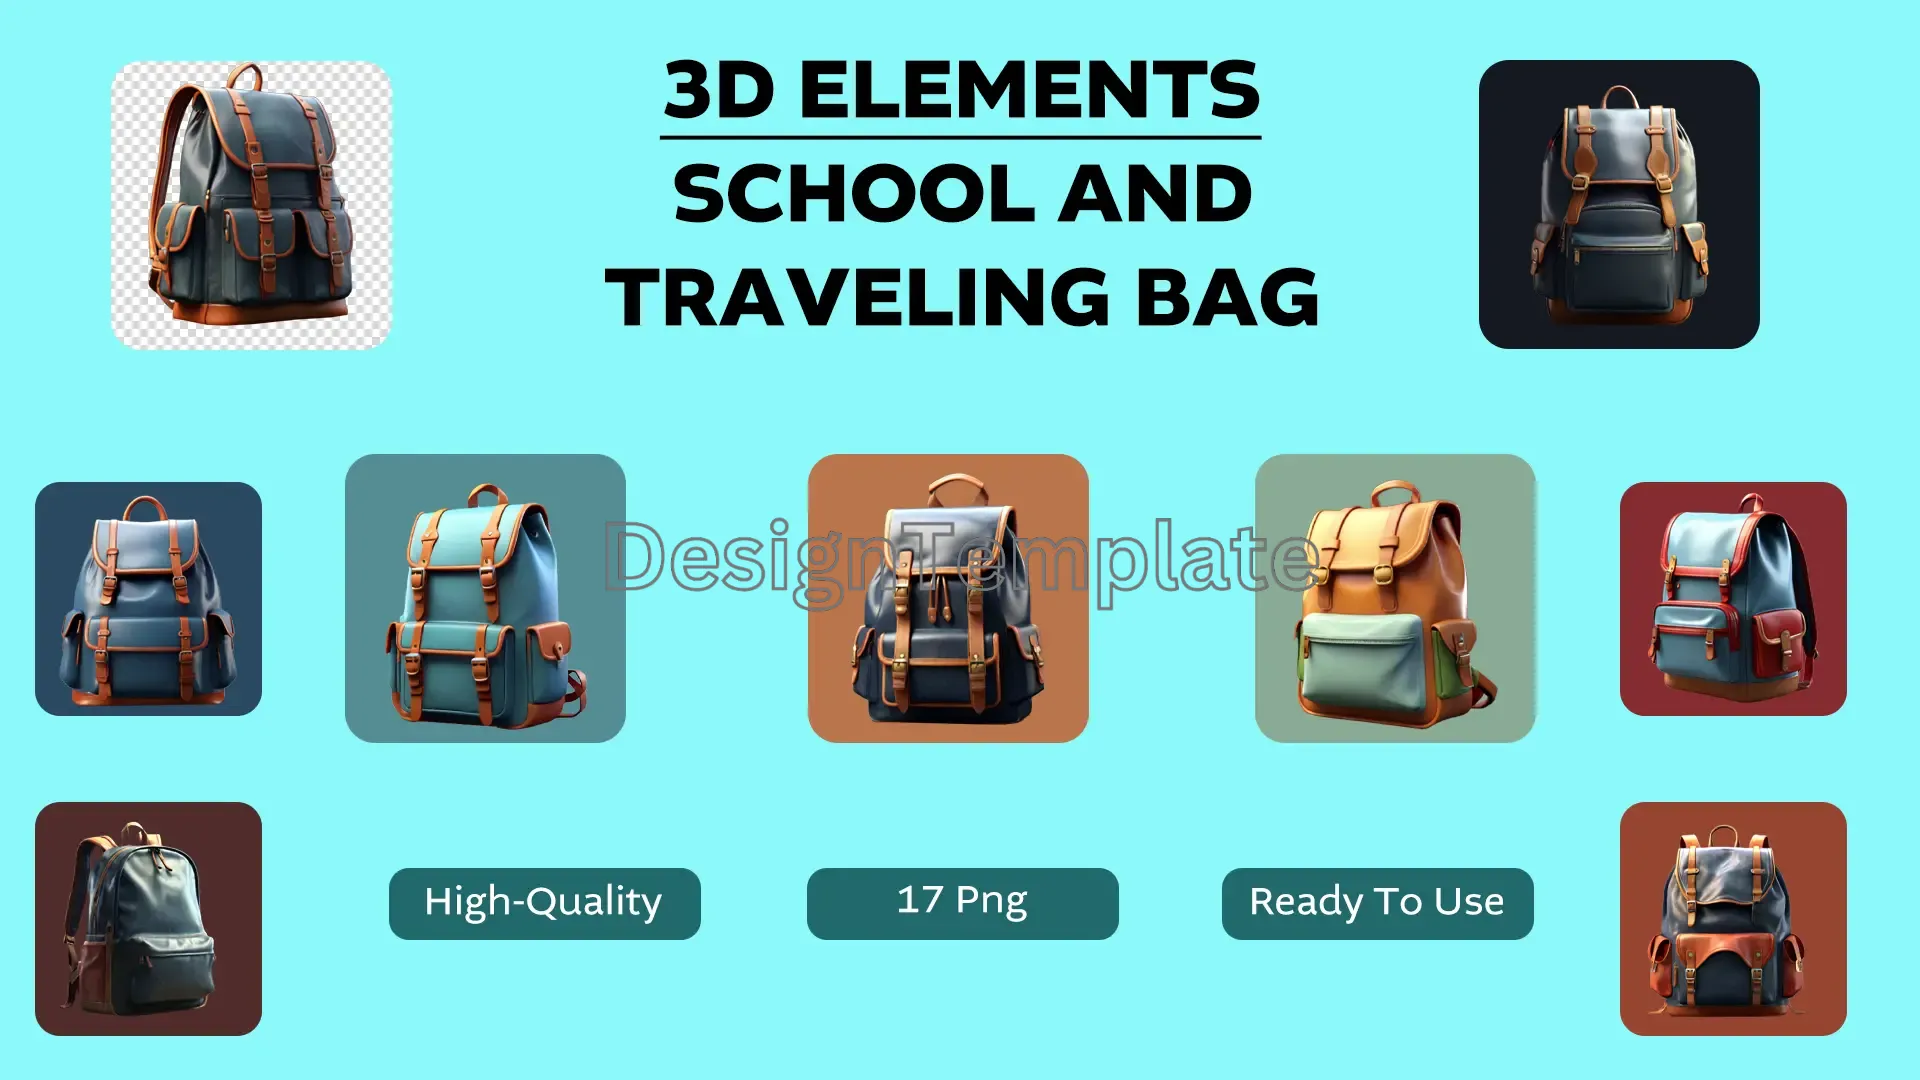 Journey Essentials Vibrant 3D Travel Bag Icons image